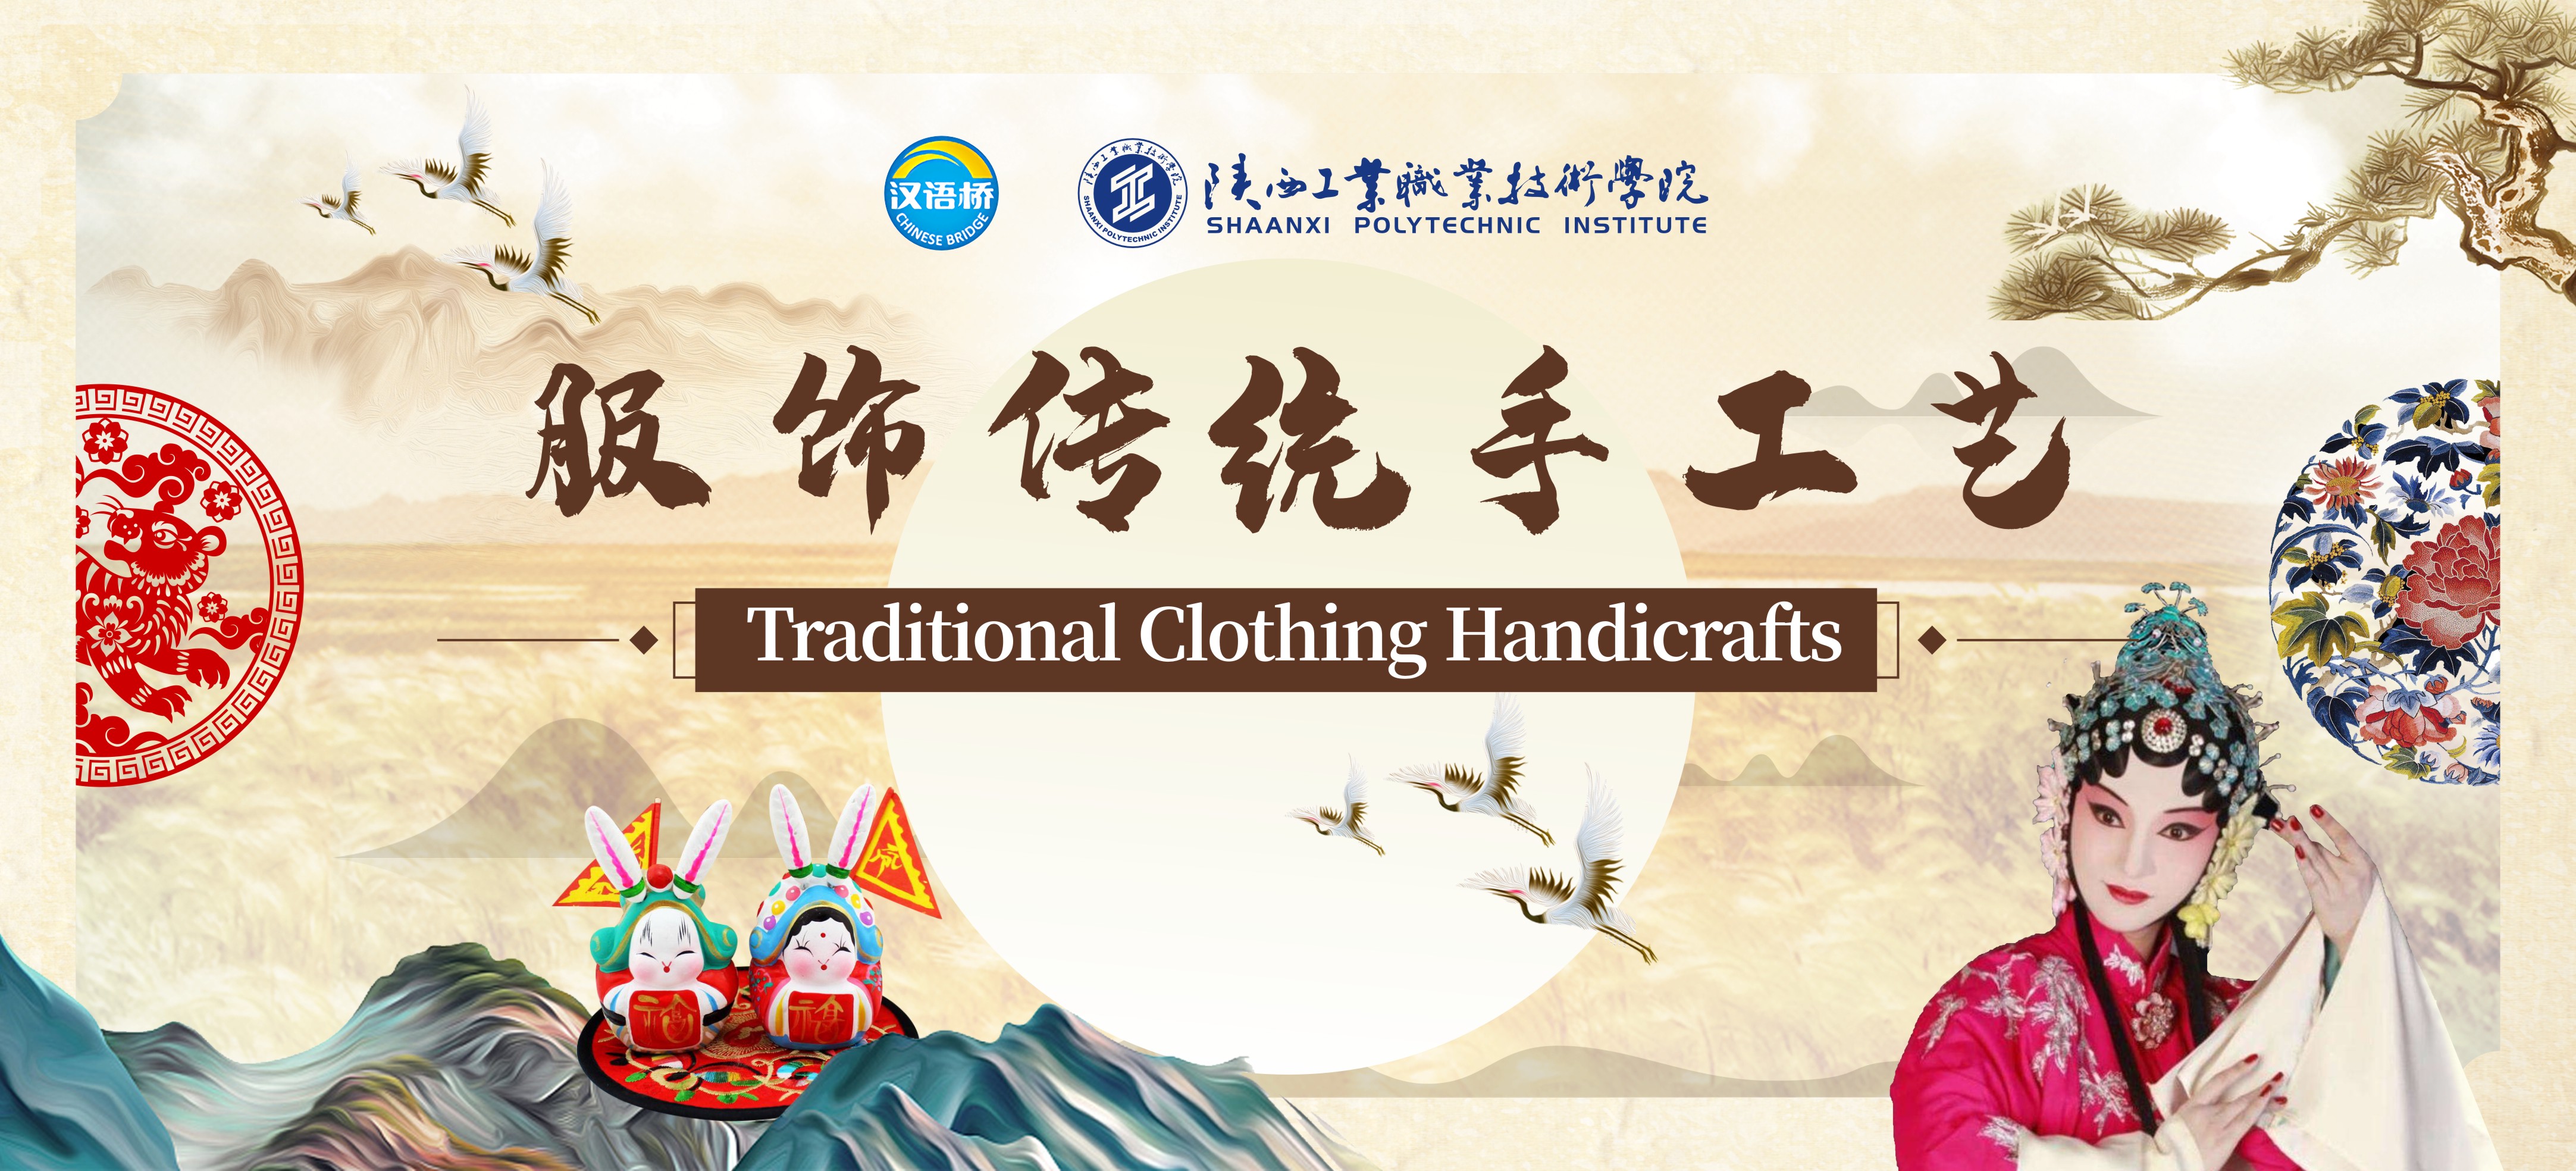 traditional handicraft of clothing